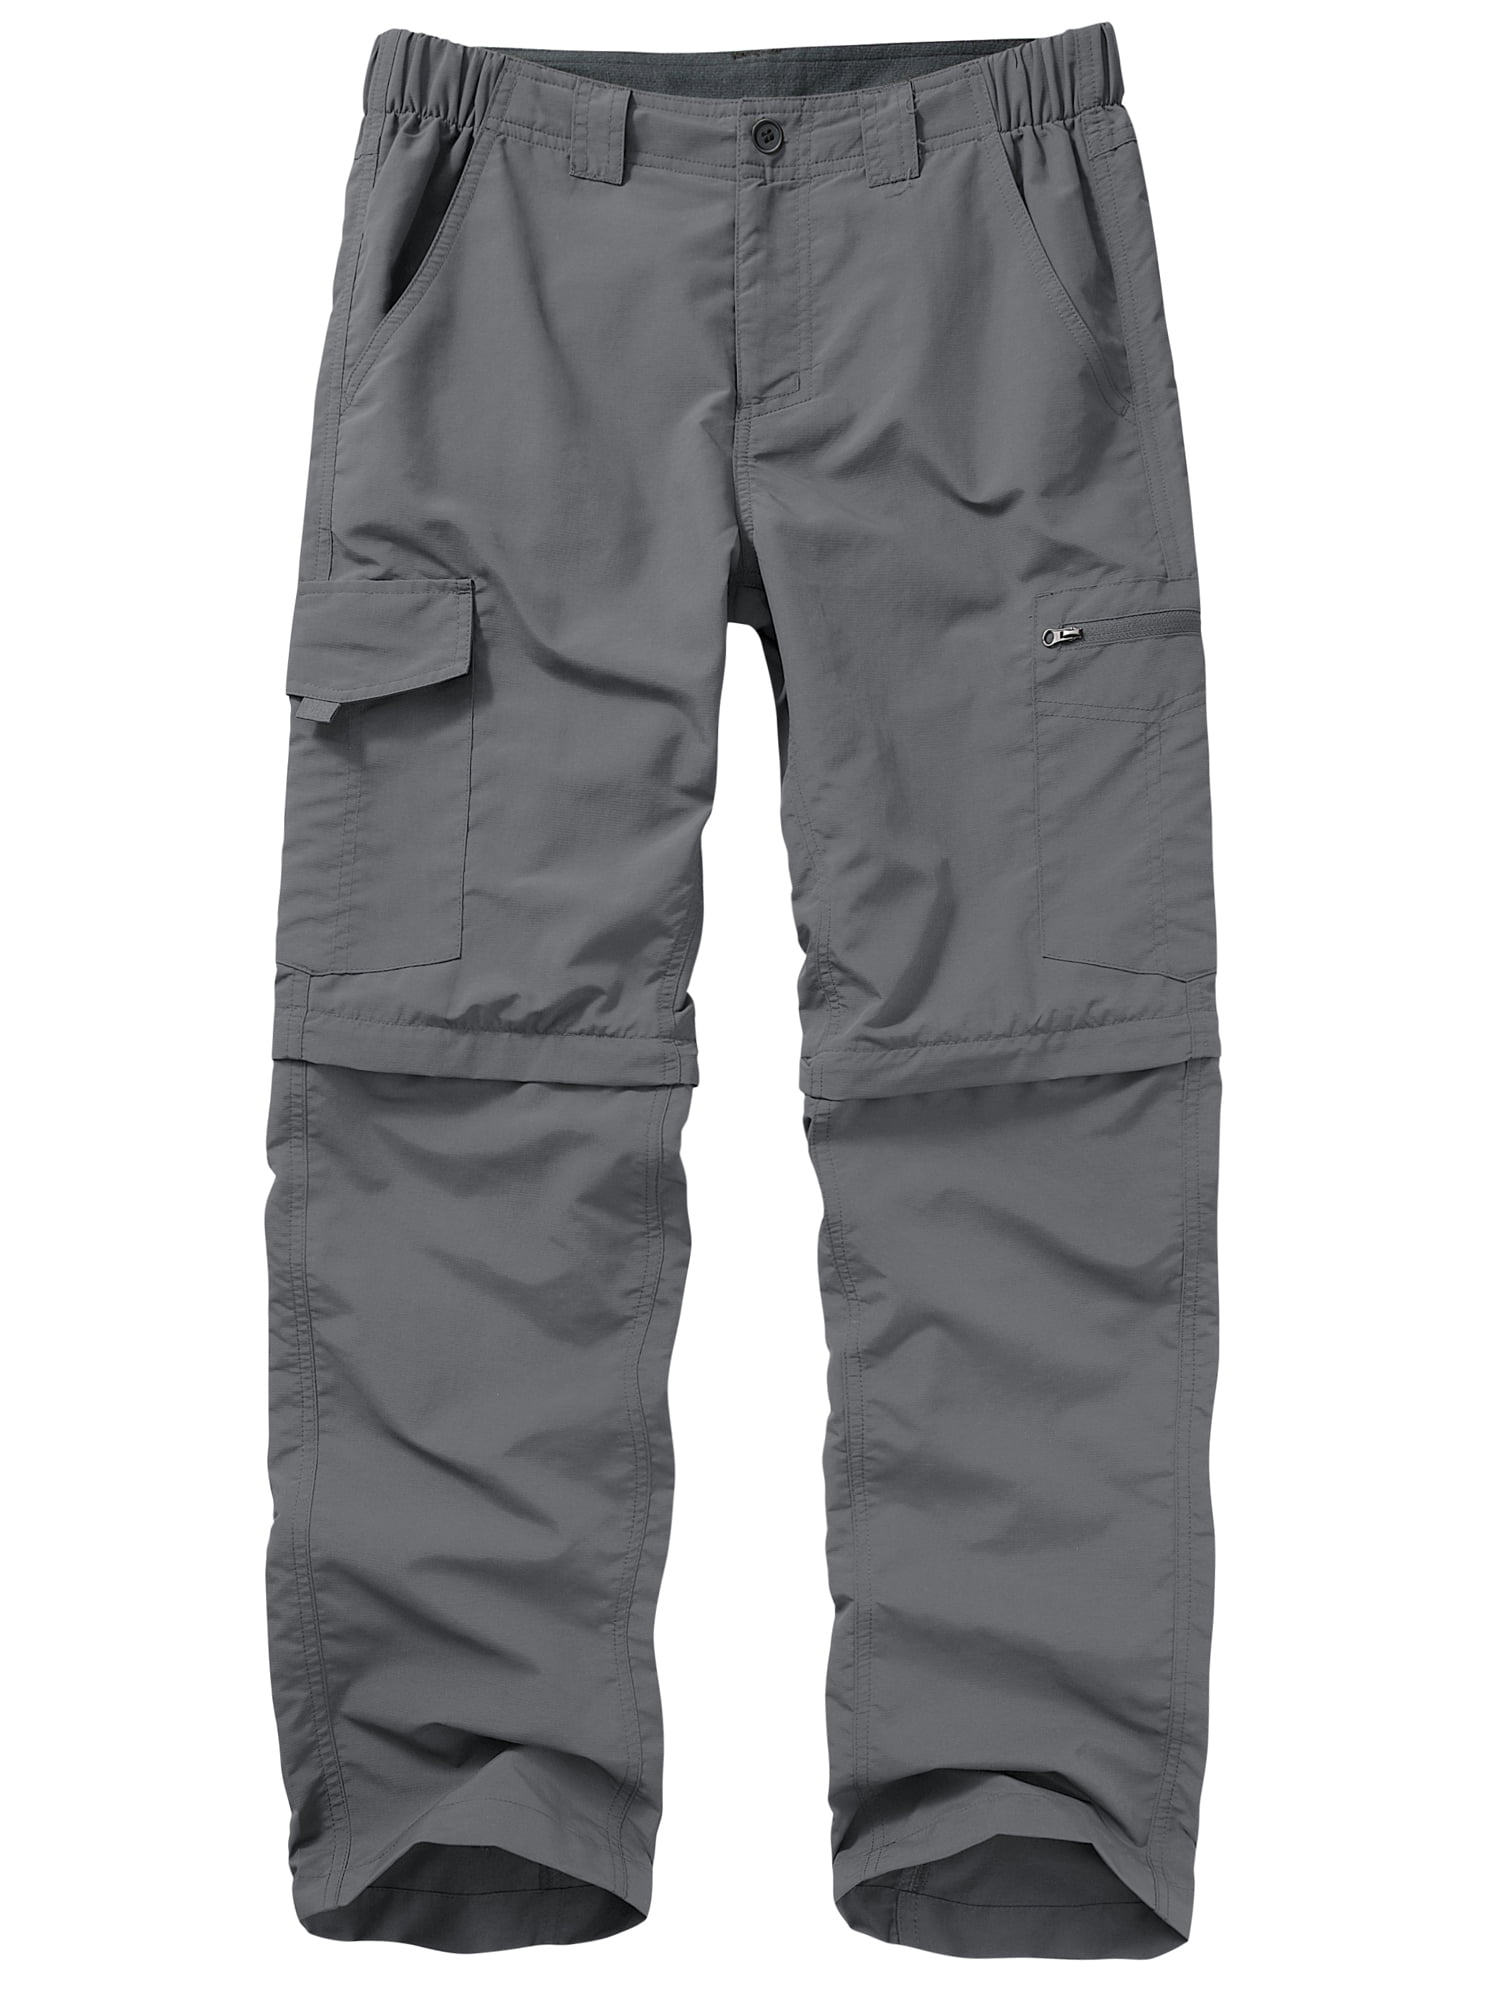 Mens Hiking Pants Convertible Zip Off Lightweight Quick Dry Fishing ...